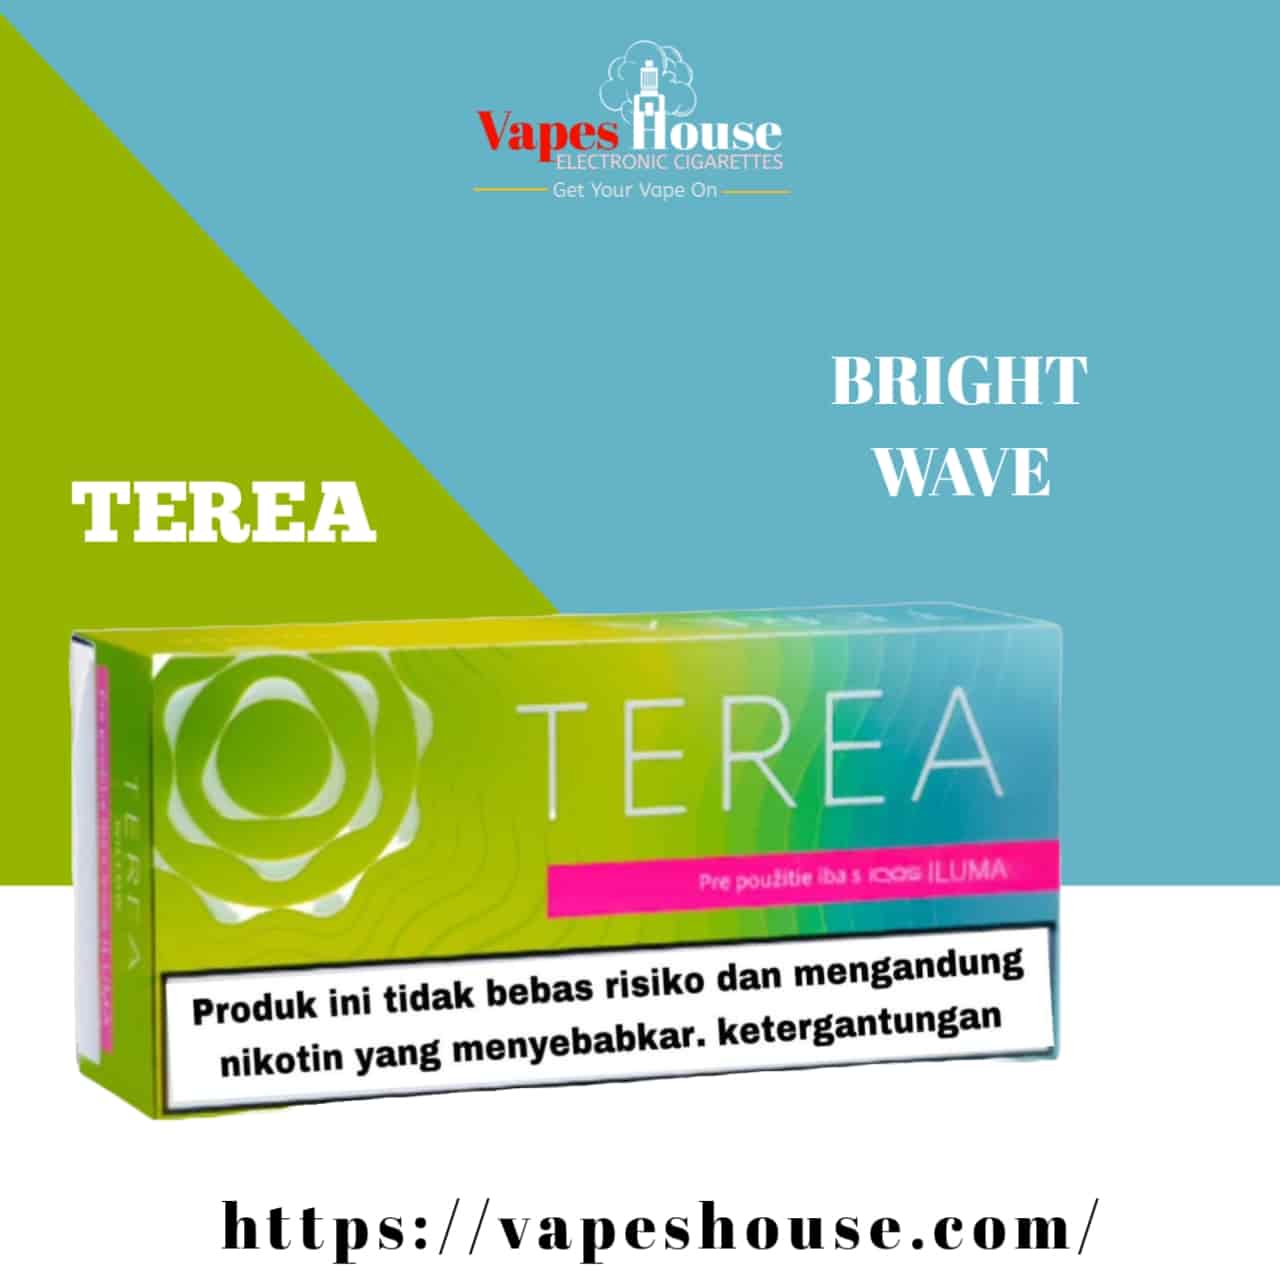 Bright Wave Terea IQOS